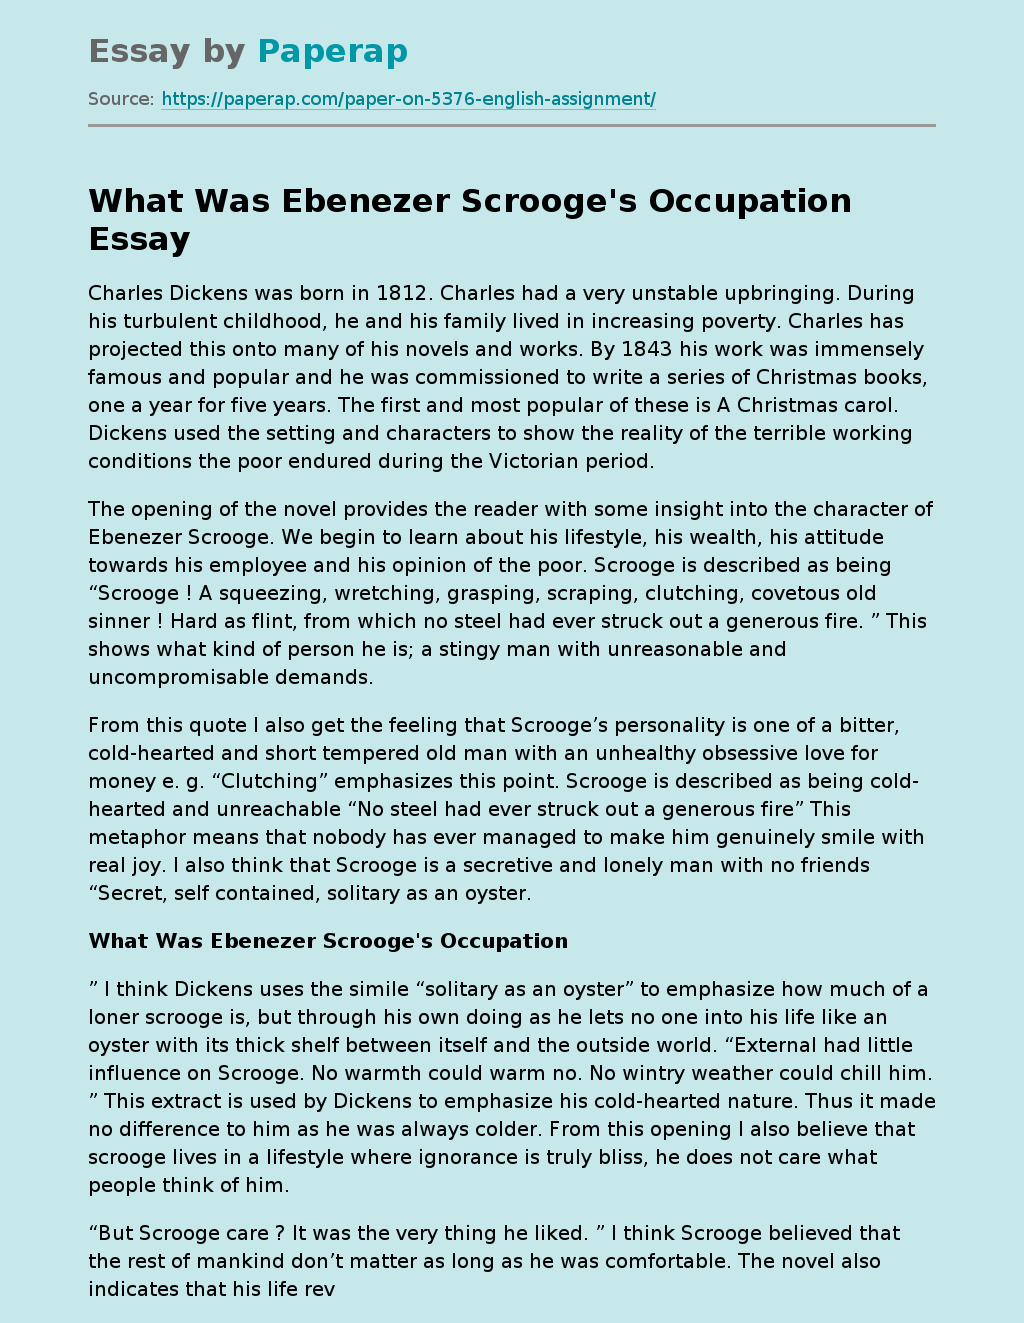 What Was Ebenezer Scrooge's Occupation